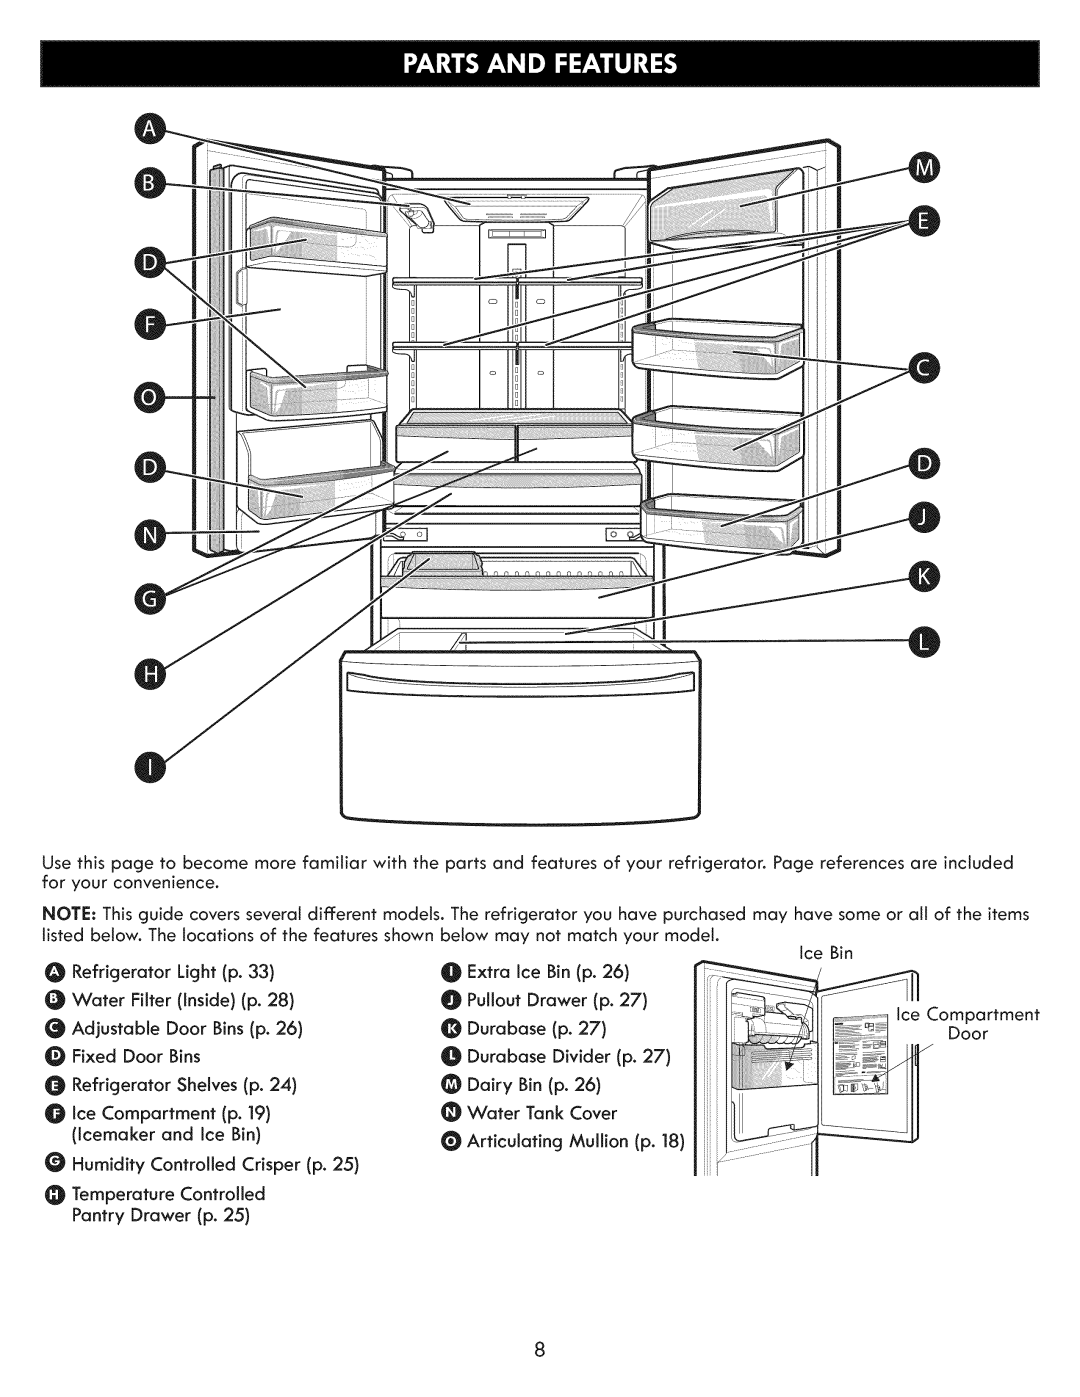 Kenmore 795.7103 manual ORefrigerator Light p. 33 Water Filter inside p 